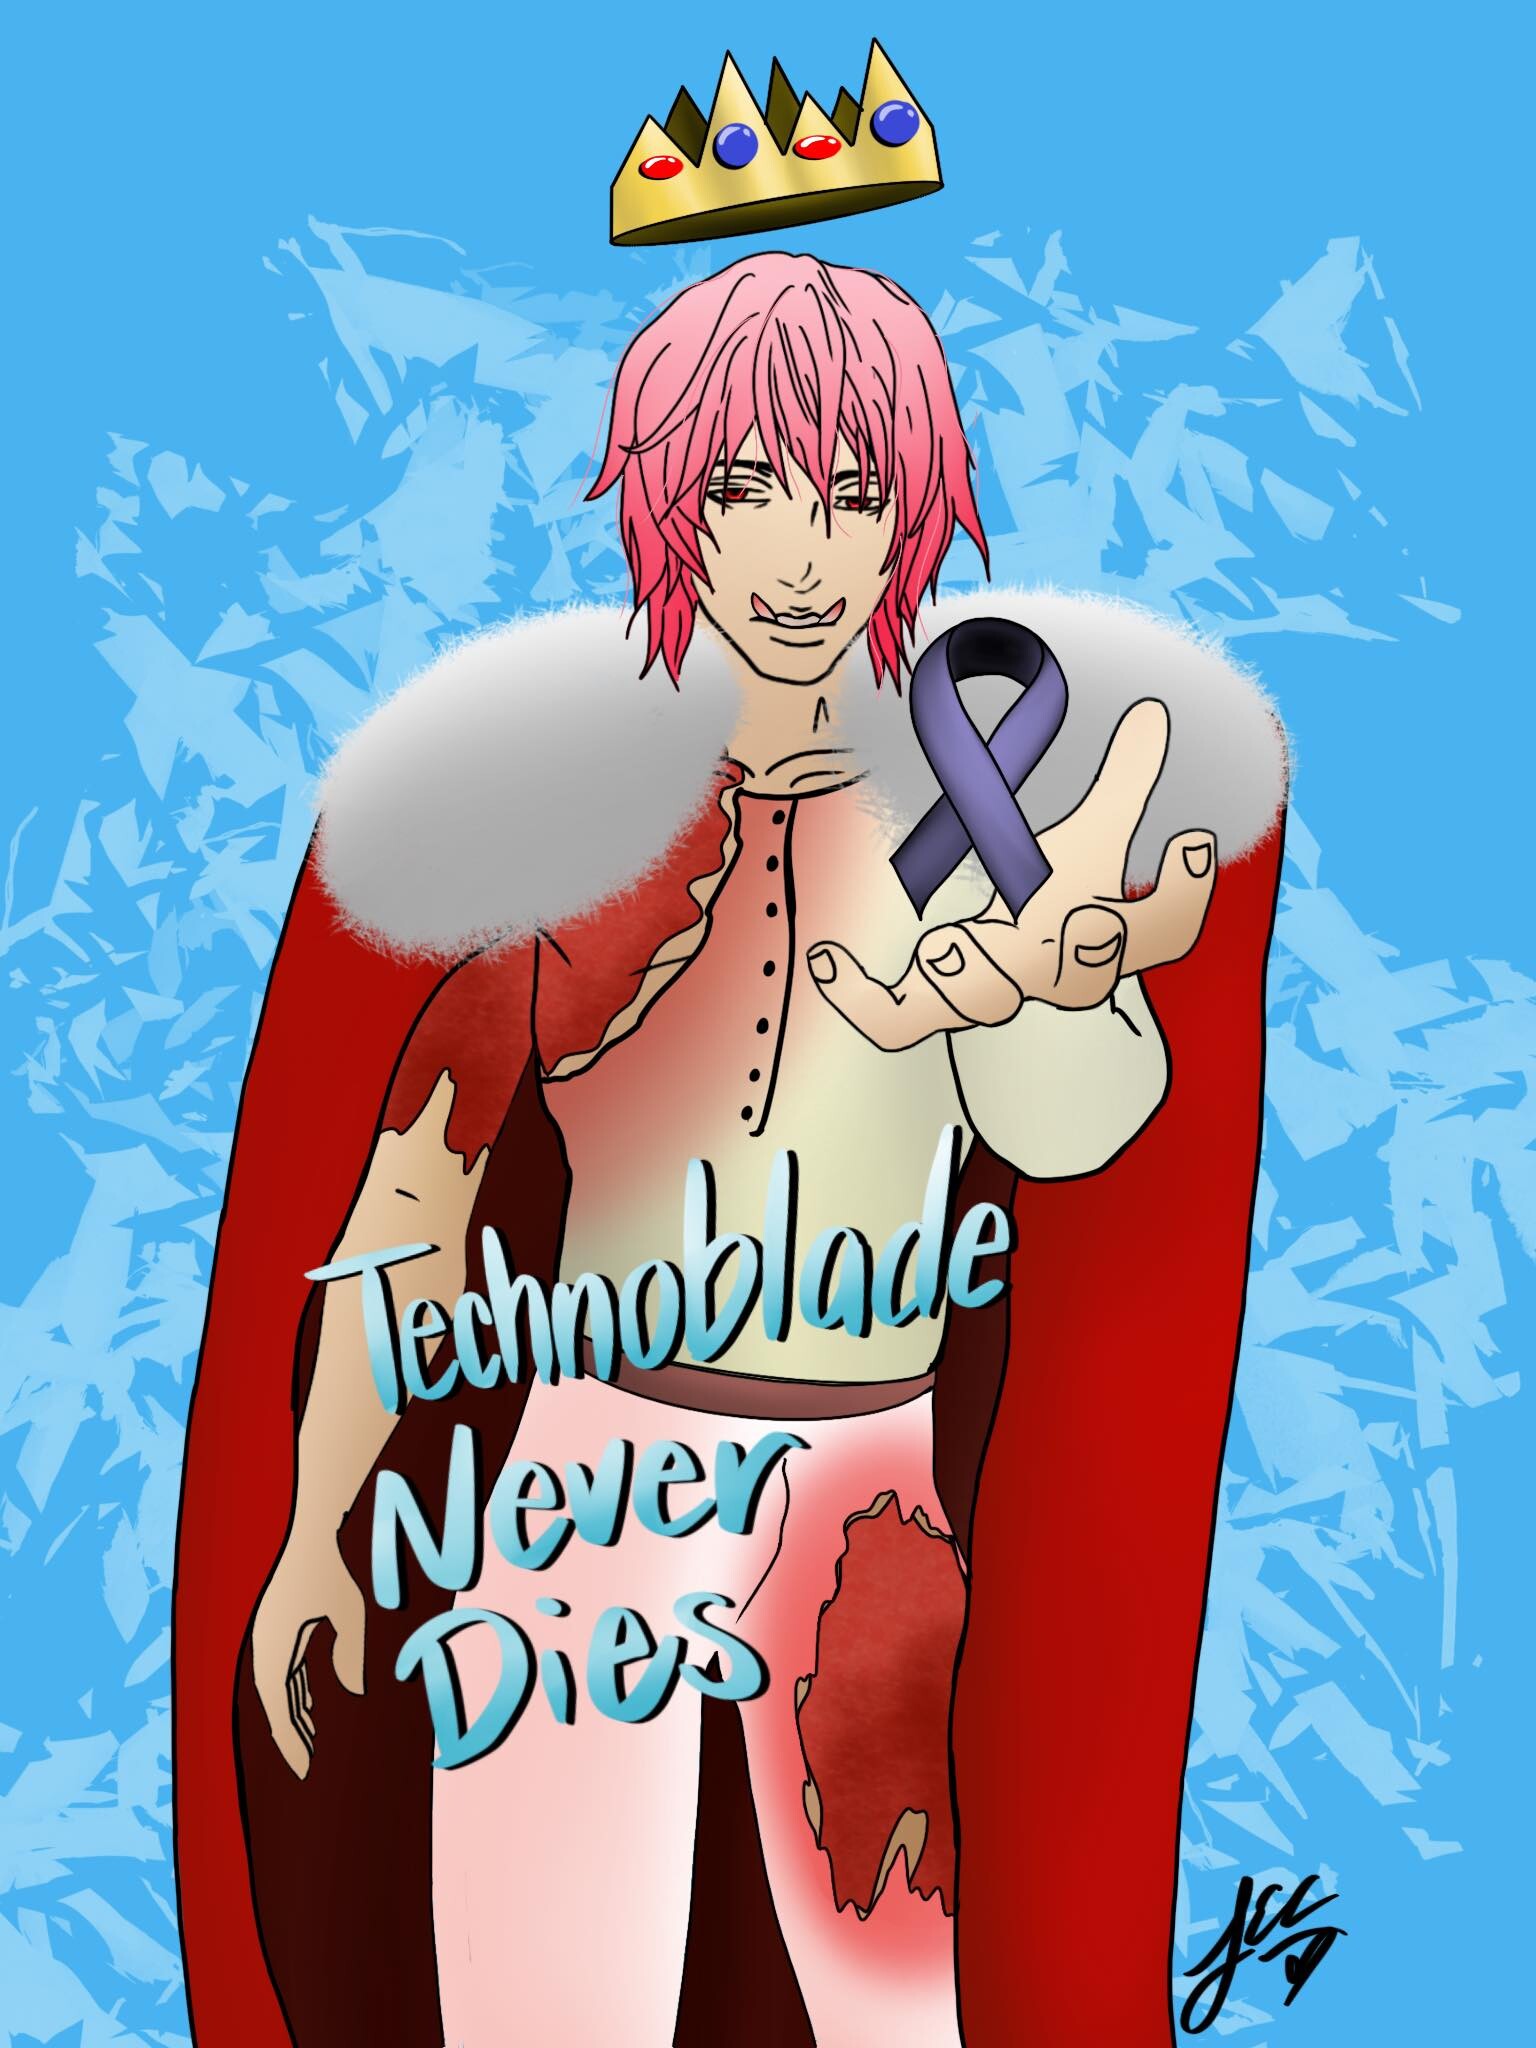 technoblade never dies !!